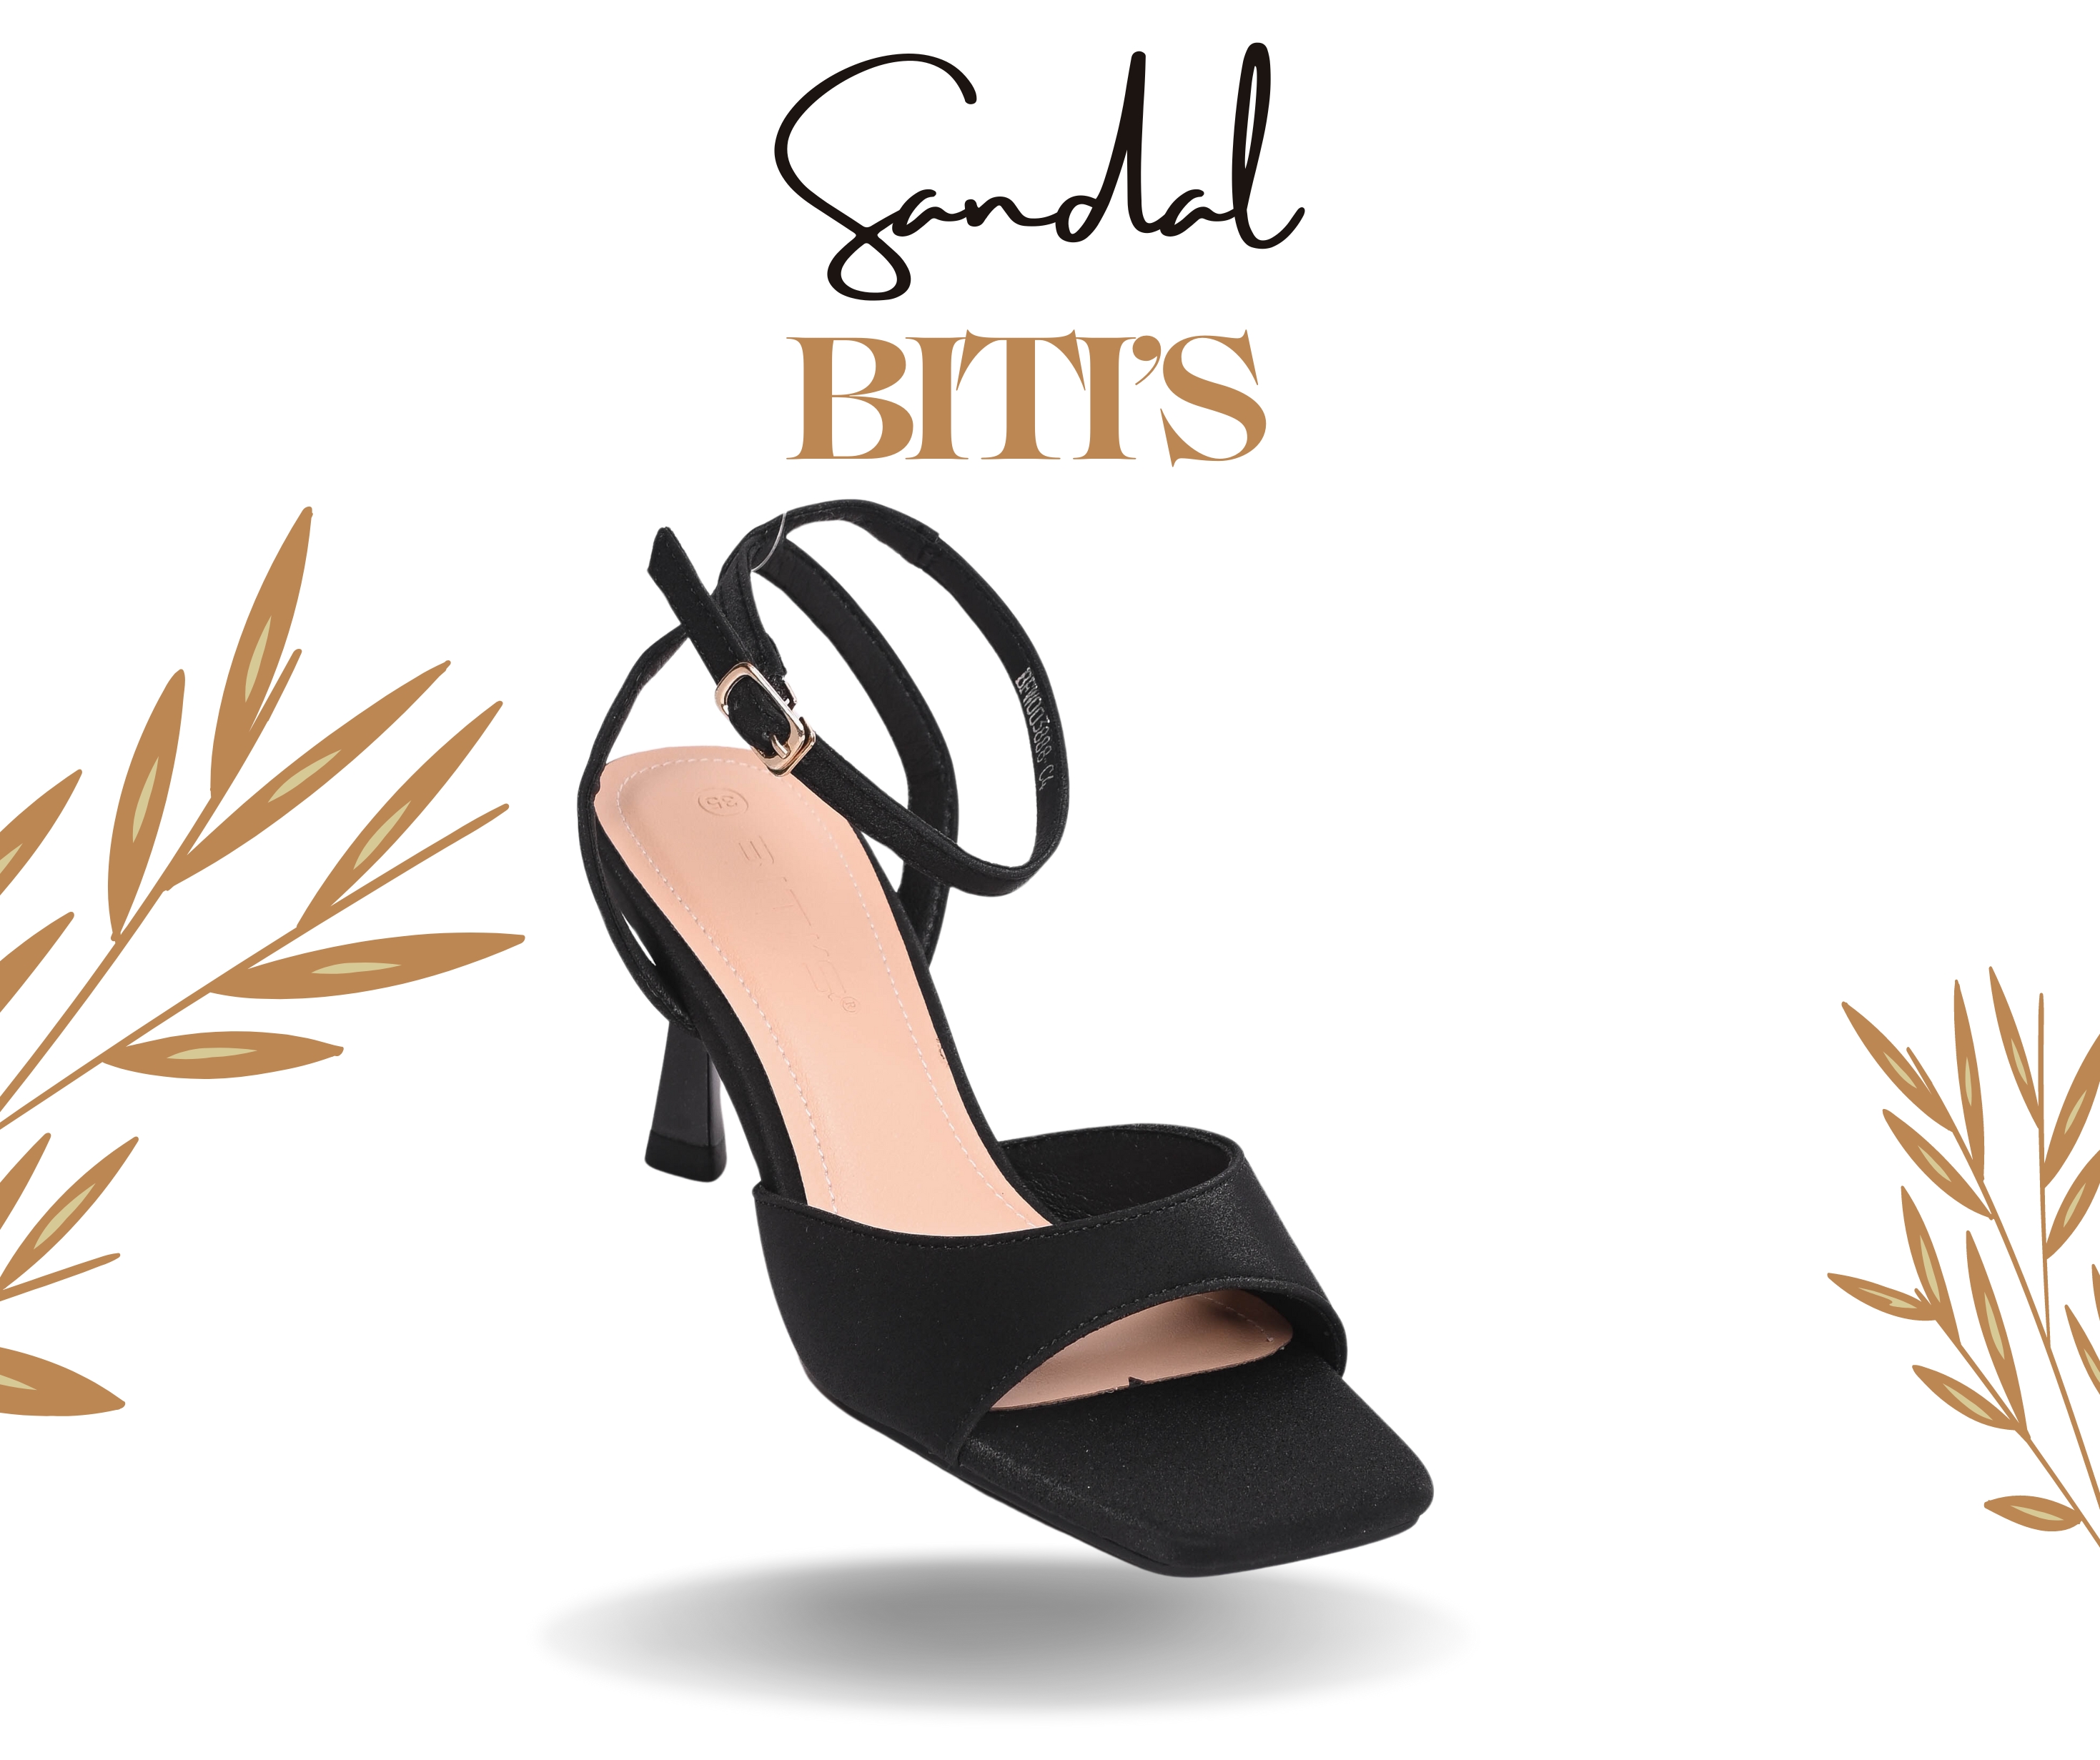 Sandal Bitis nữ thời trang (35-39)